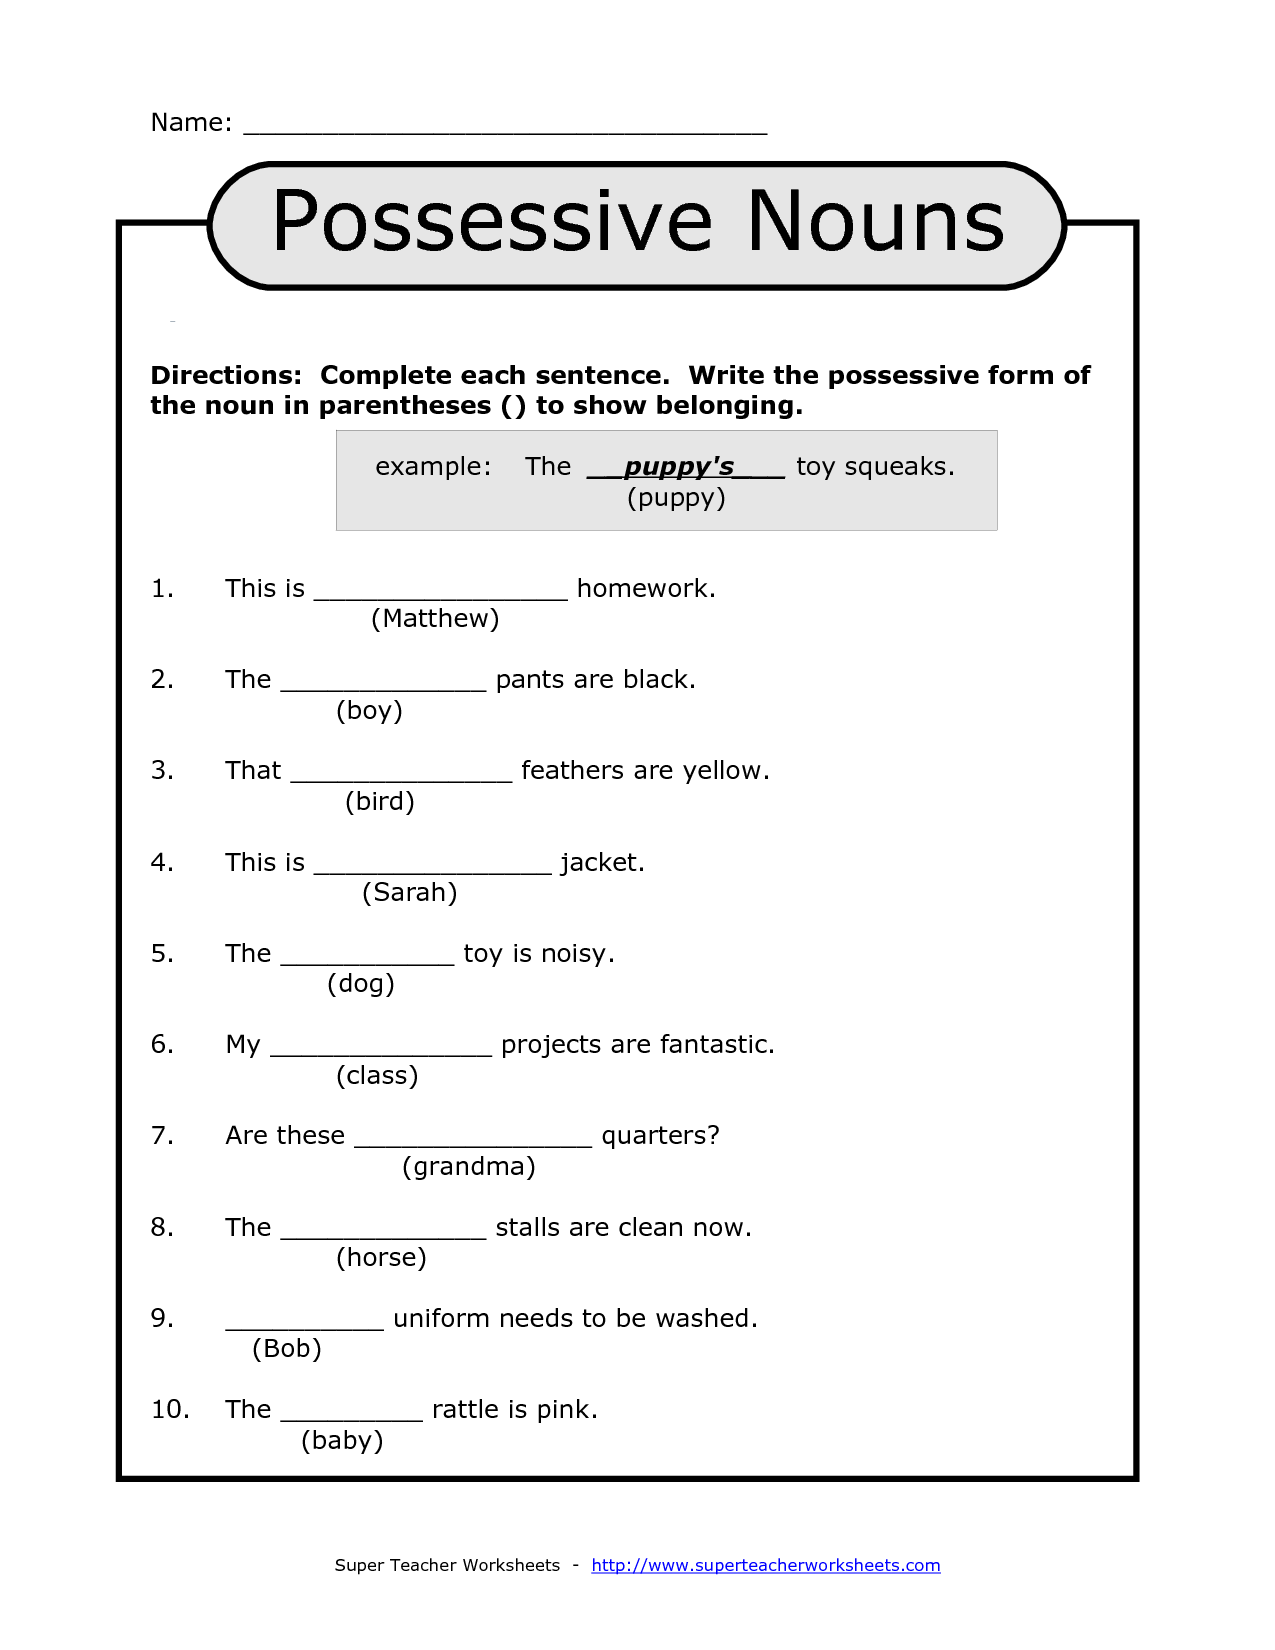 15-best-images-of-free-possessive-nouns-printable-worksheets-plural